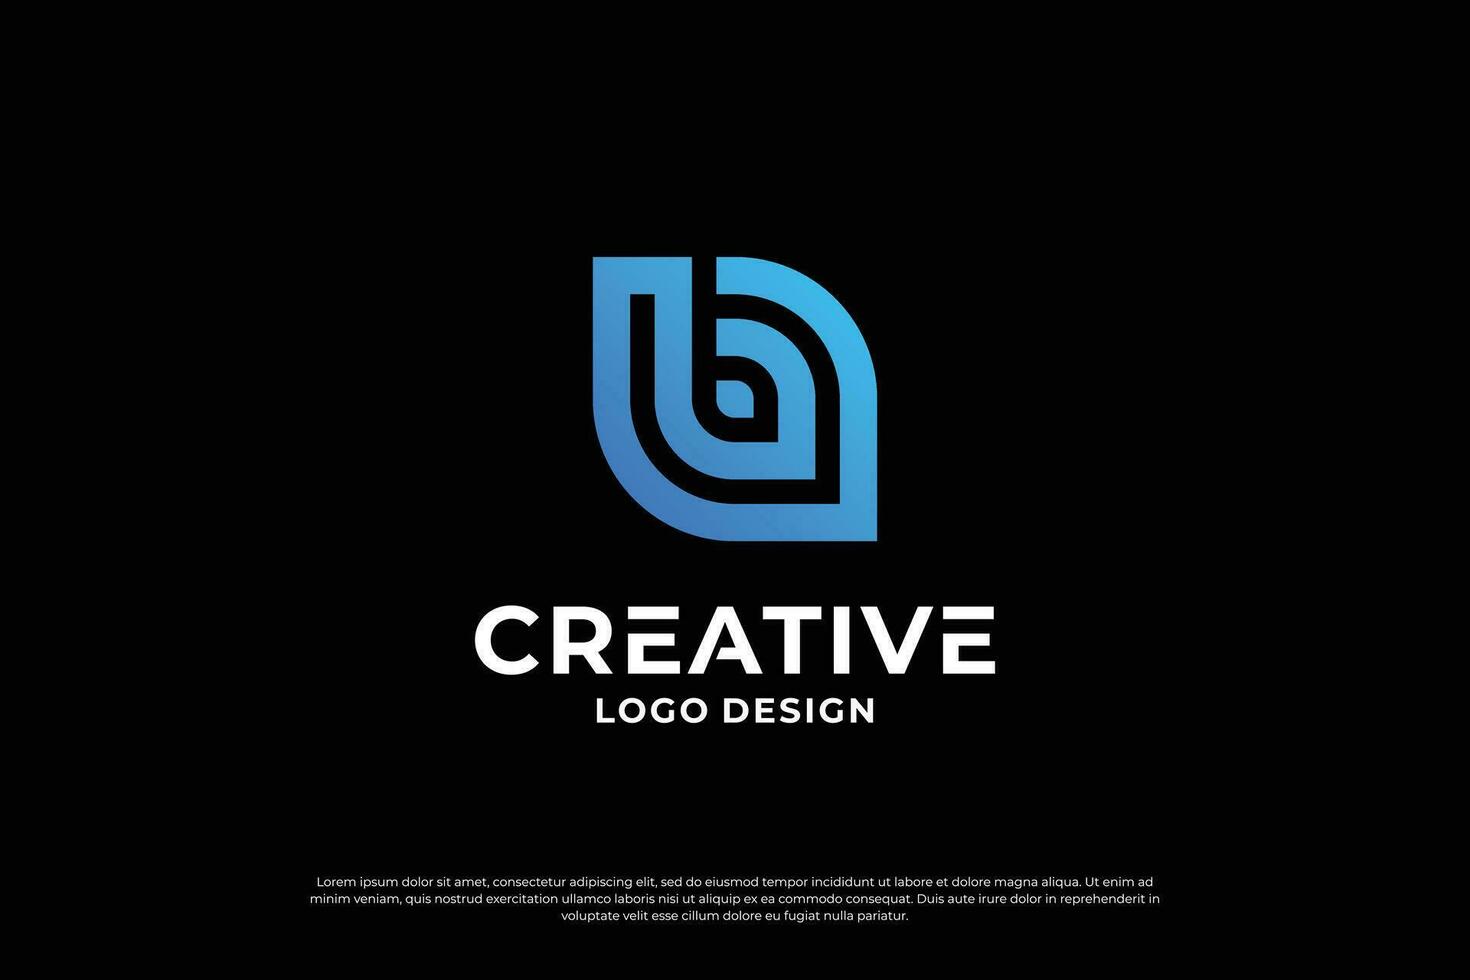 Brief b Logo Design Vorlage. kreativ Initiale Briefe b Logo Symbol. vektor